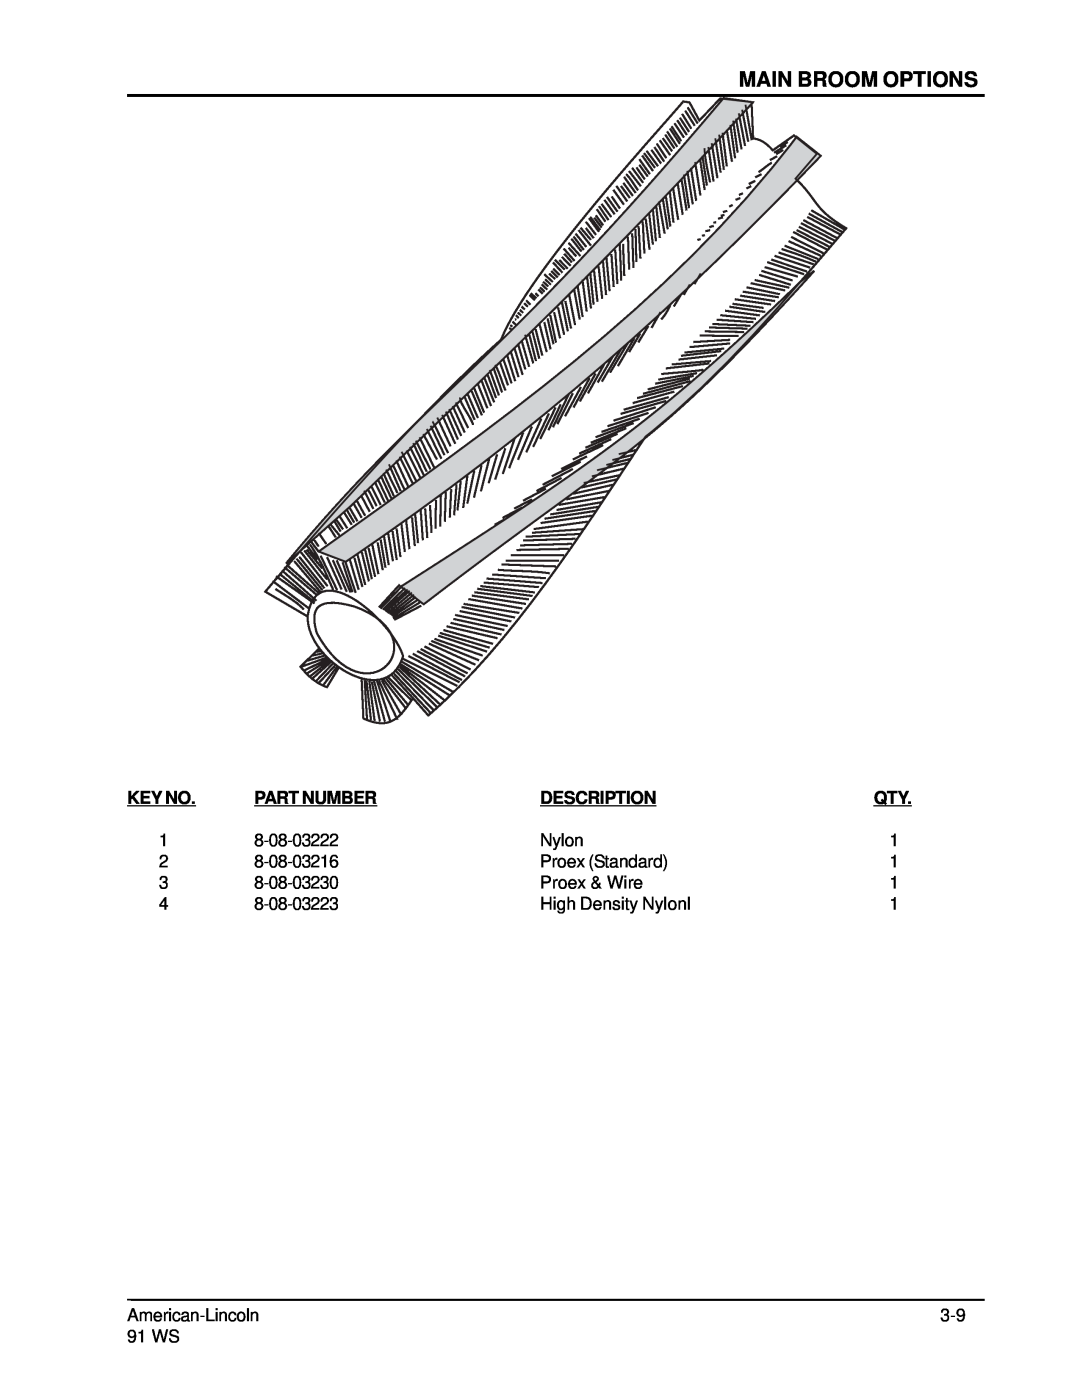 Nilfisk-ALTO 91WS manual Main Broom Options, Part Number, Description 